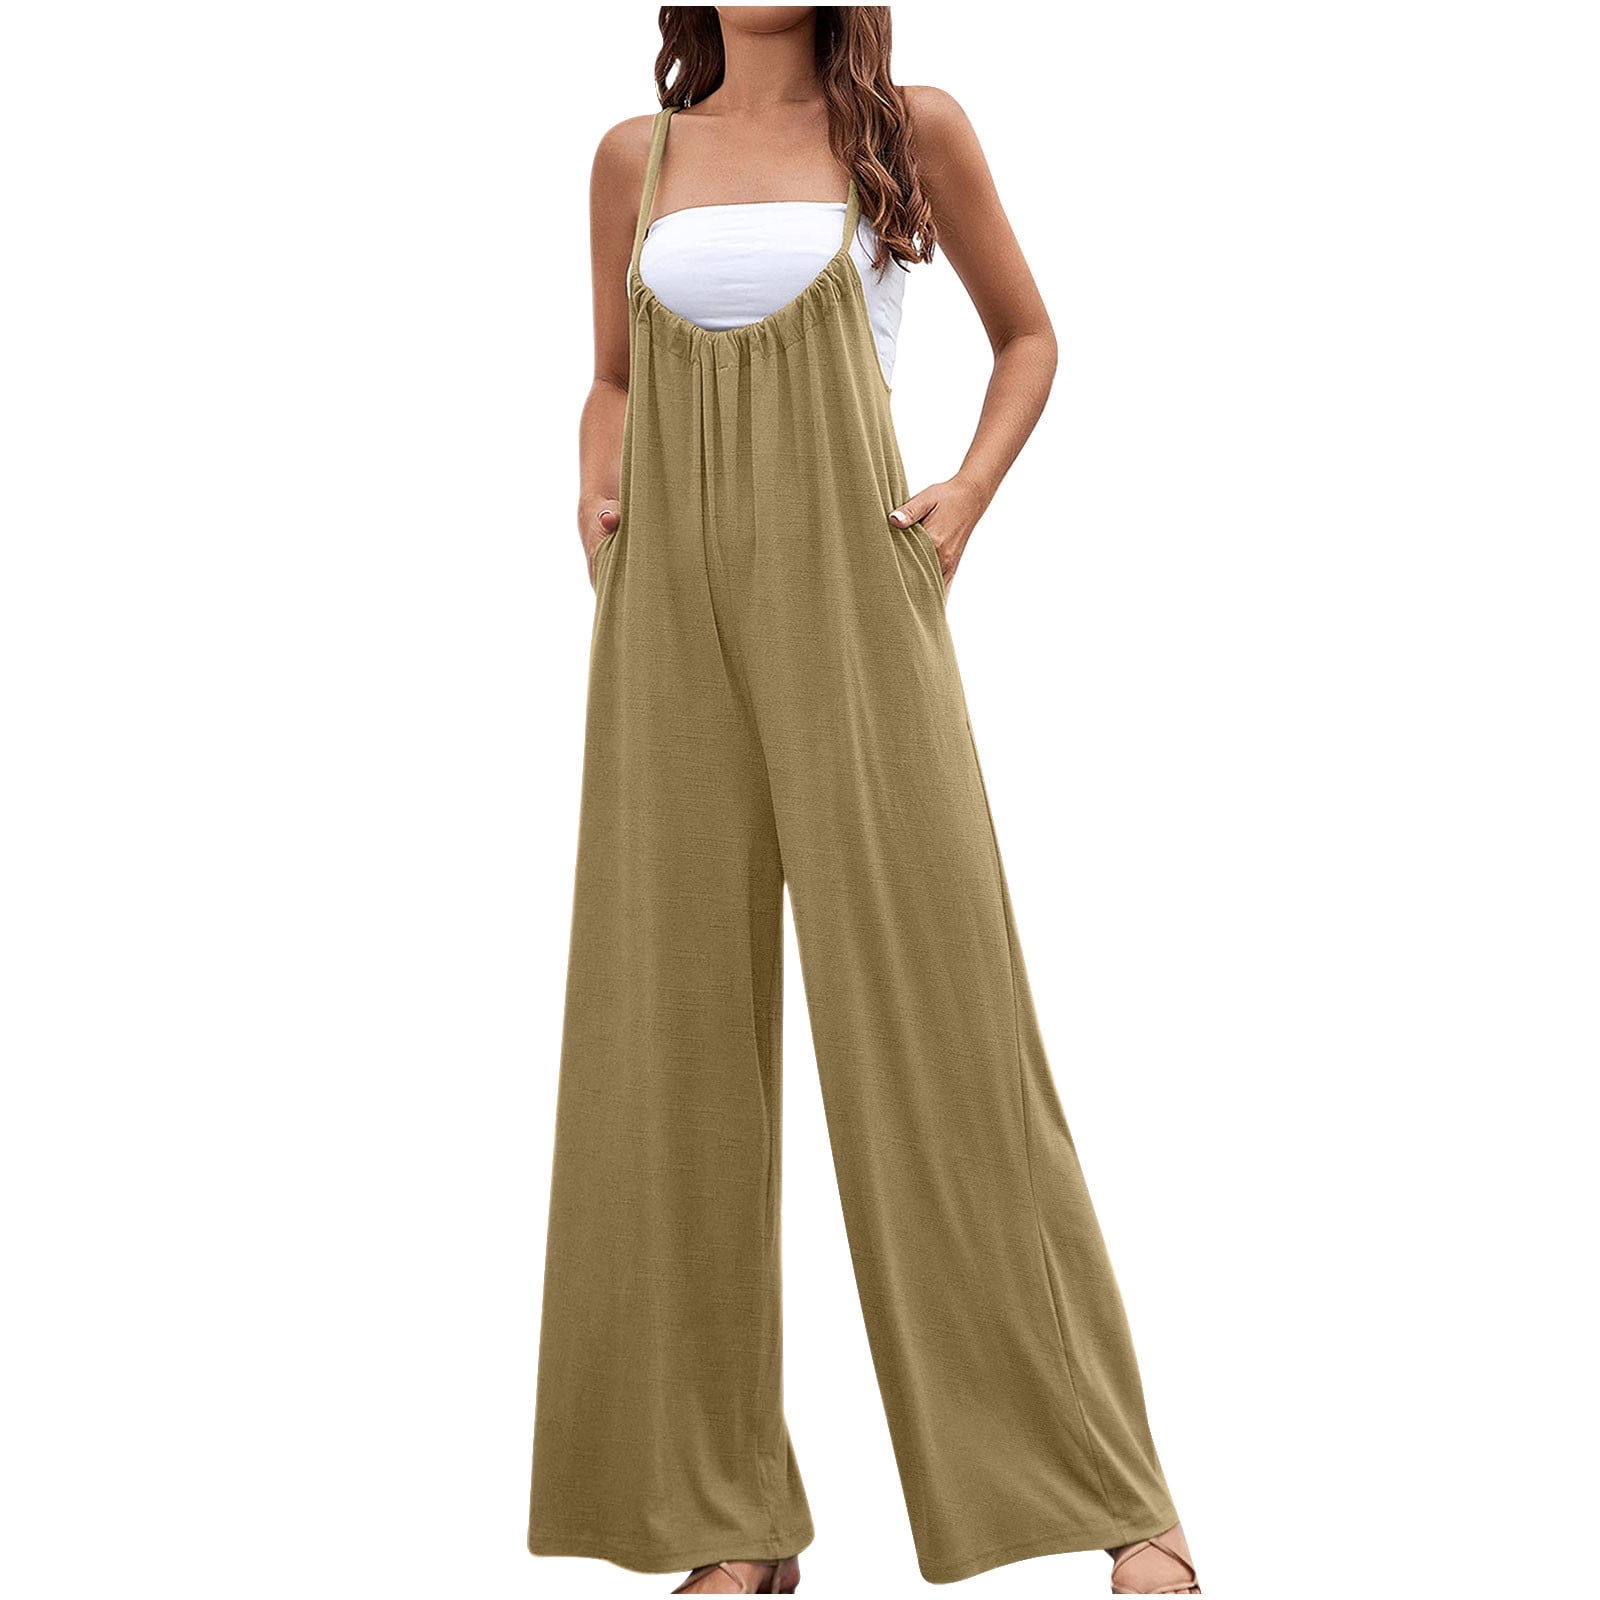 VEKDONE Cheap Stuff Under 5 Dollars Womens Cotton Linen Rompers Spaghetti  Strap Summer Outwear Casual Loose Wide Leg Jumpsuit Short Pants 